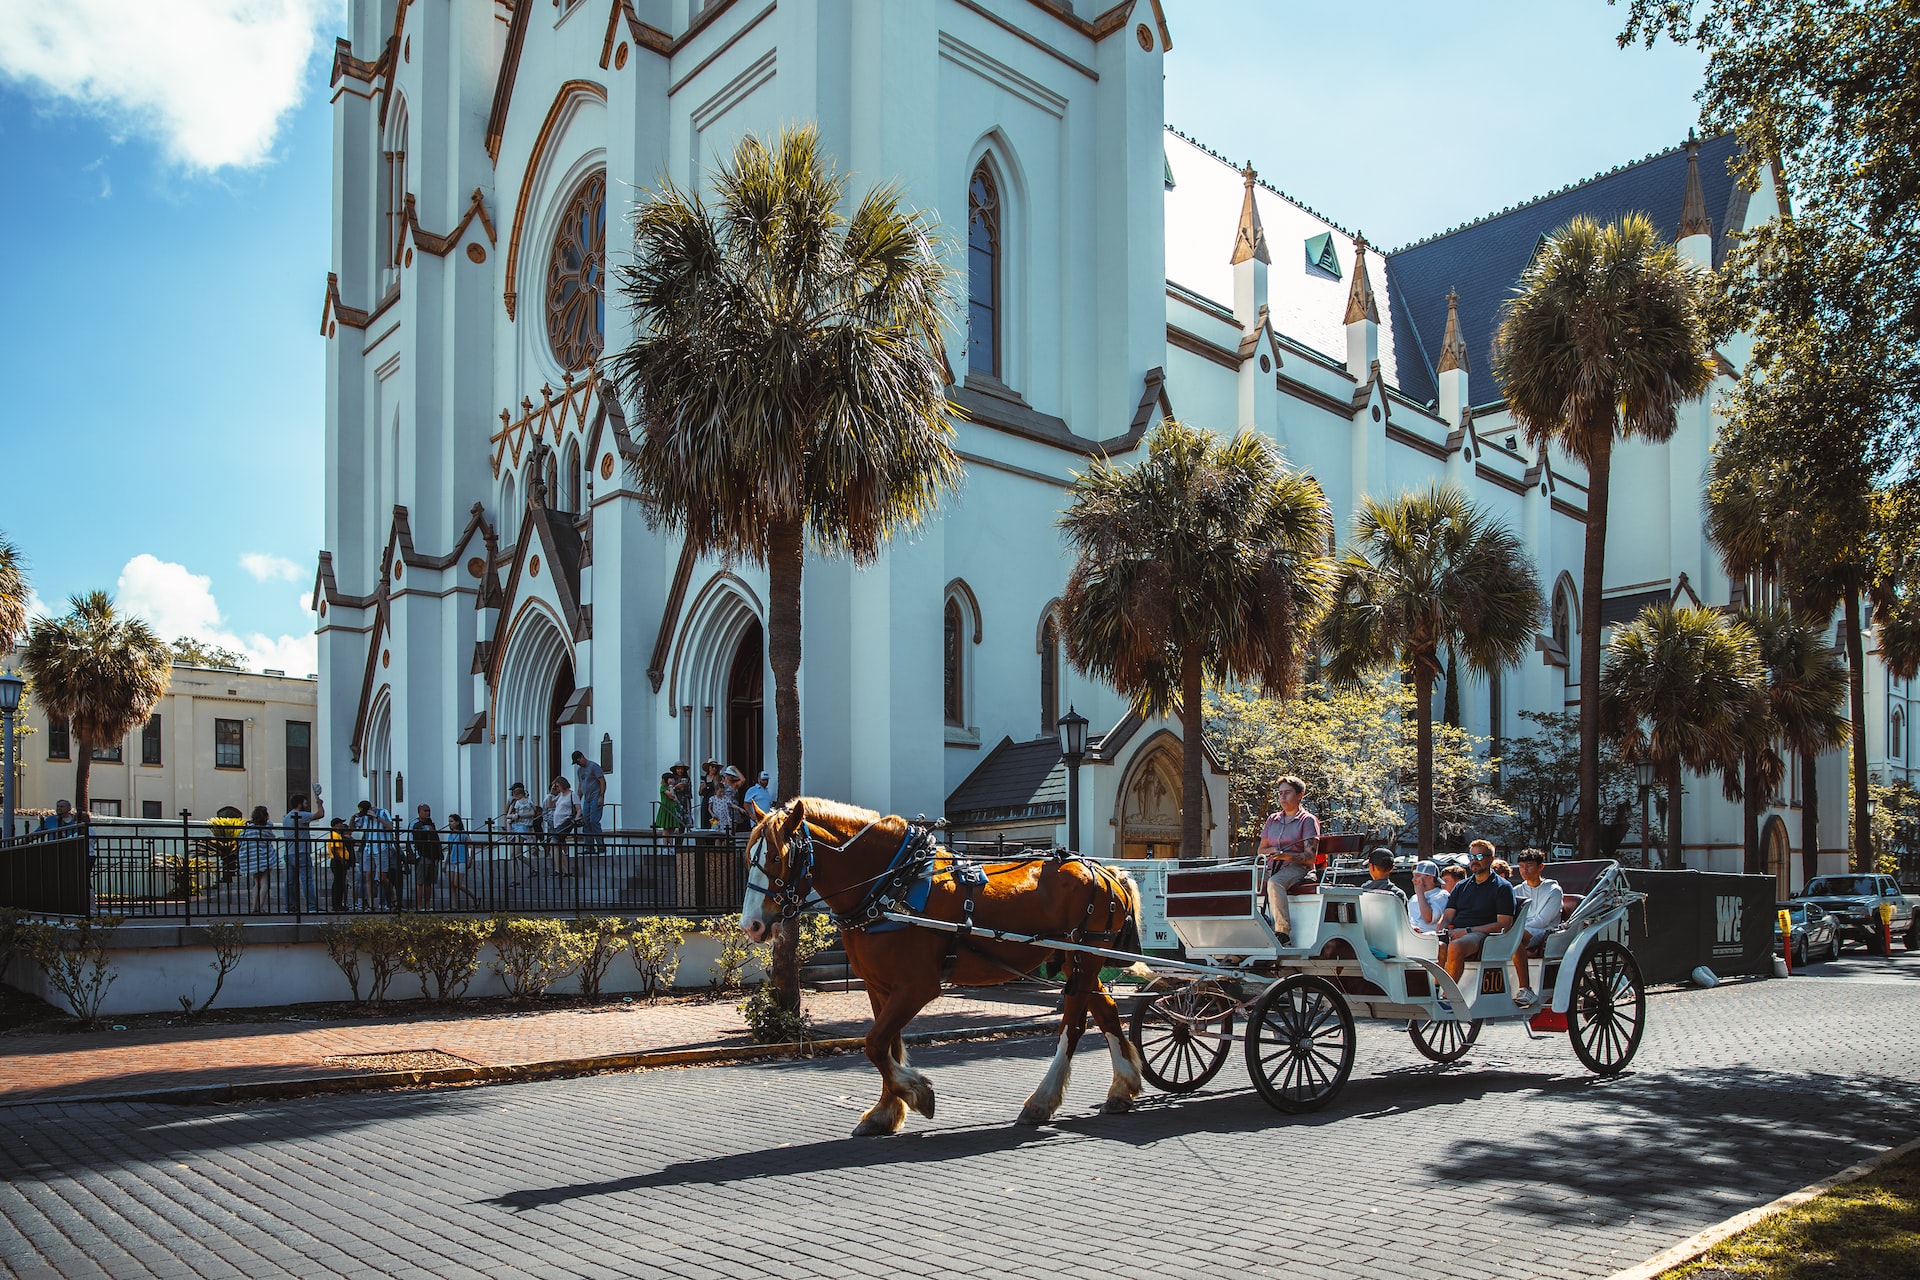 A horse and carriage walking beside an ornate church in Savannah.